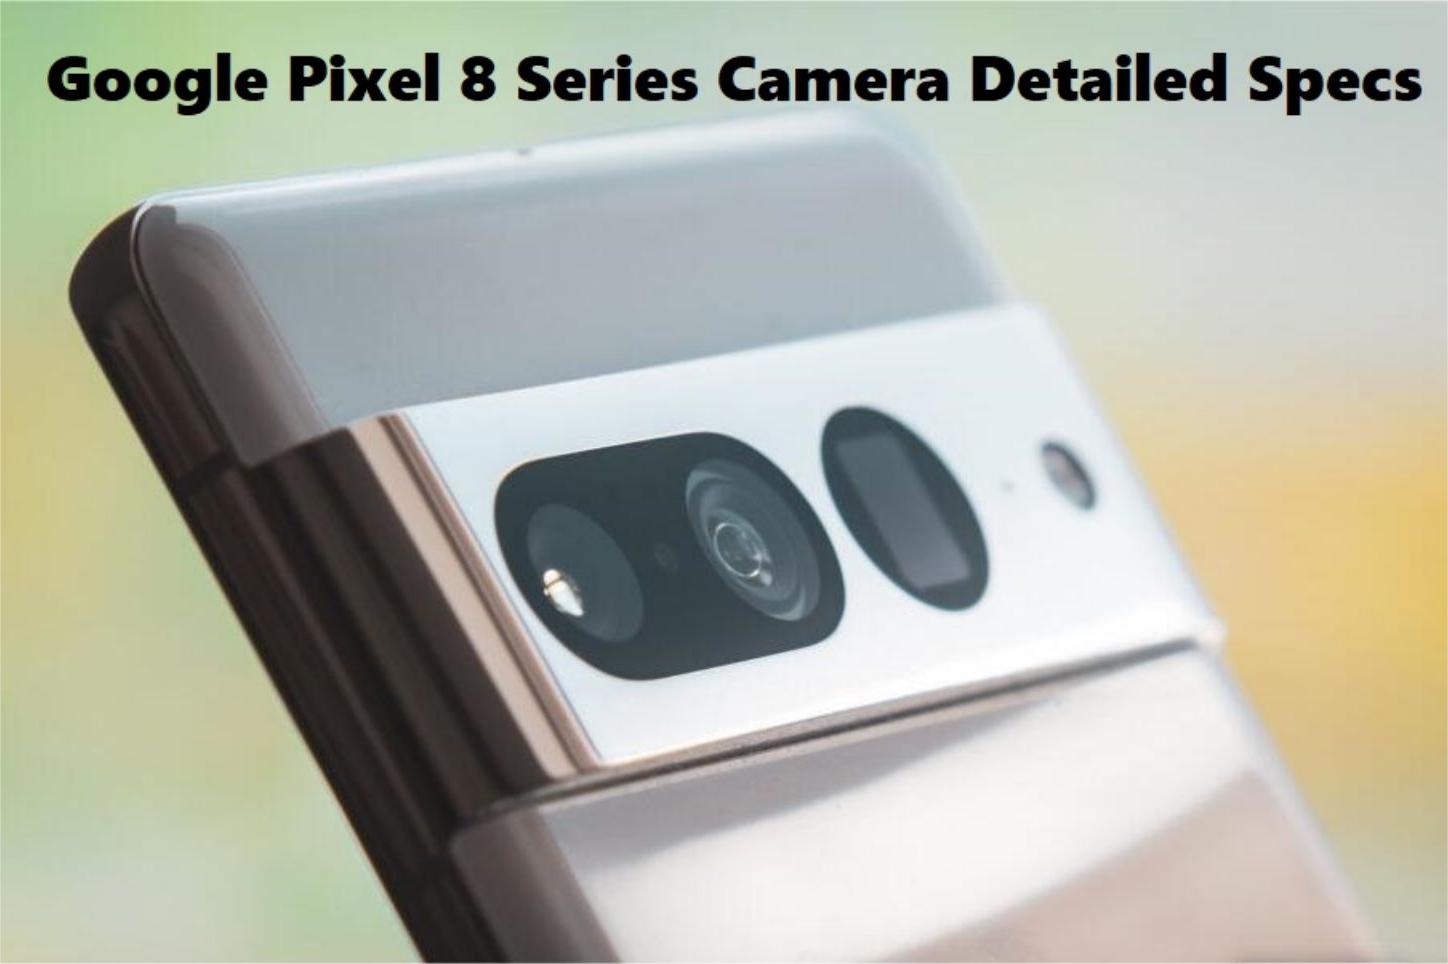 Google Pixel 8 Series Camera Detailed Specs